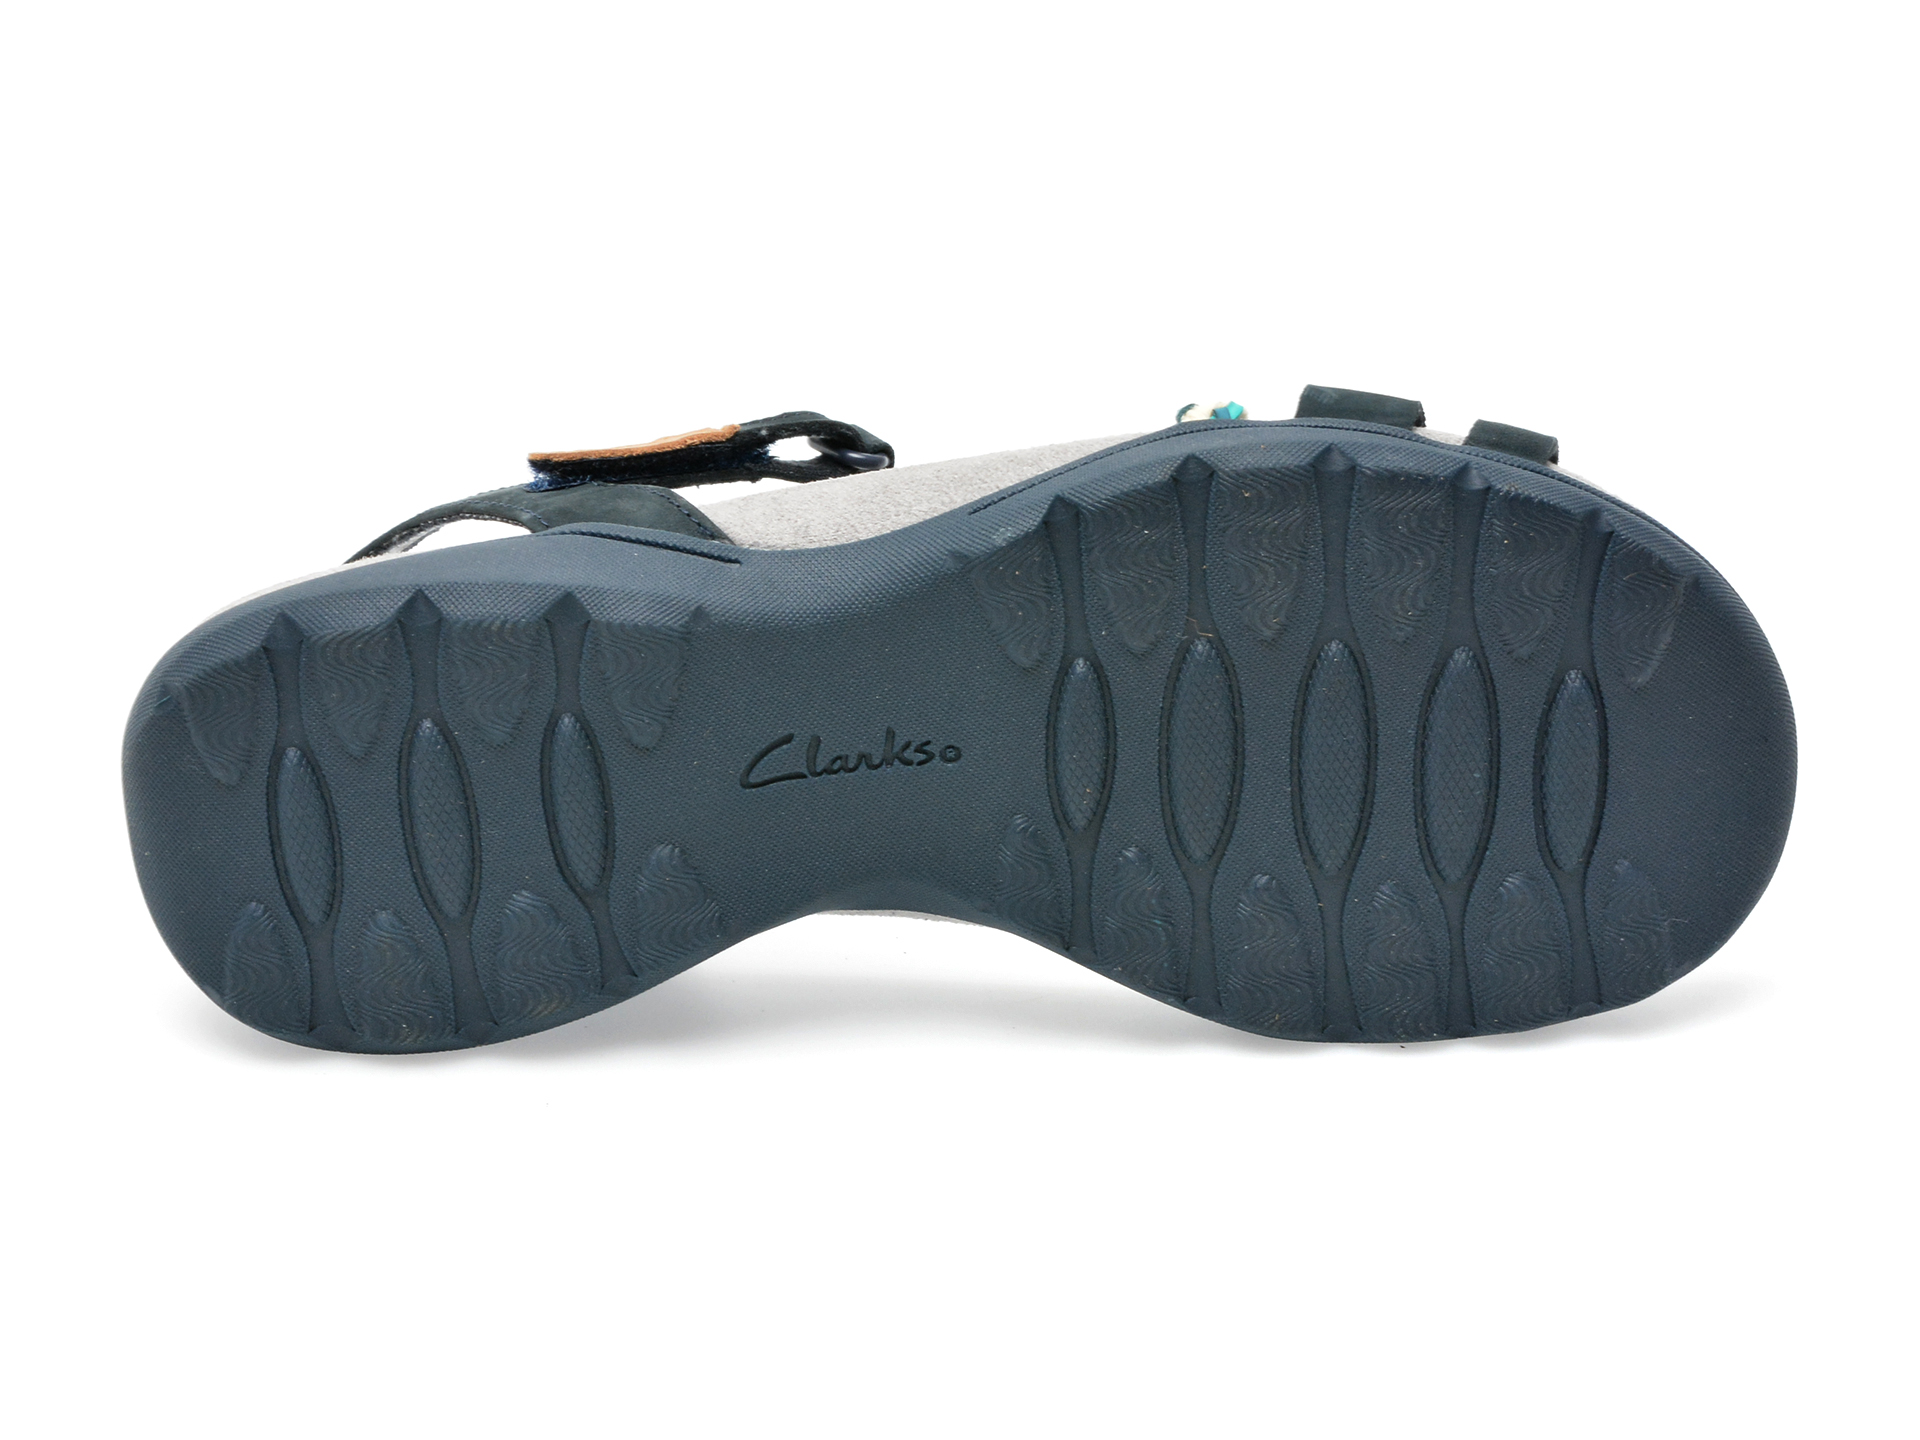 Sandale CLARKS bleumarin, AMANDA TEALITE 0912, din nabuc